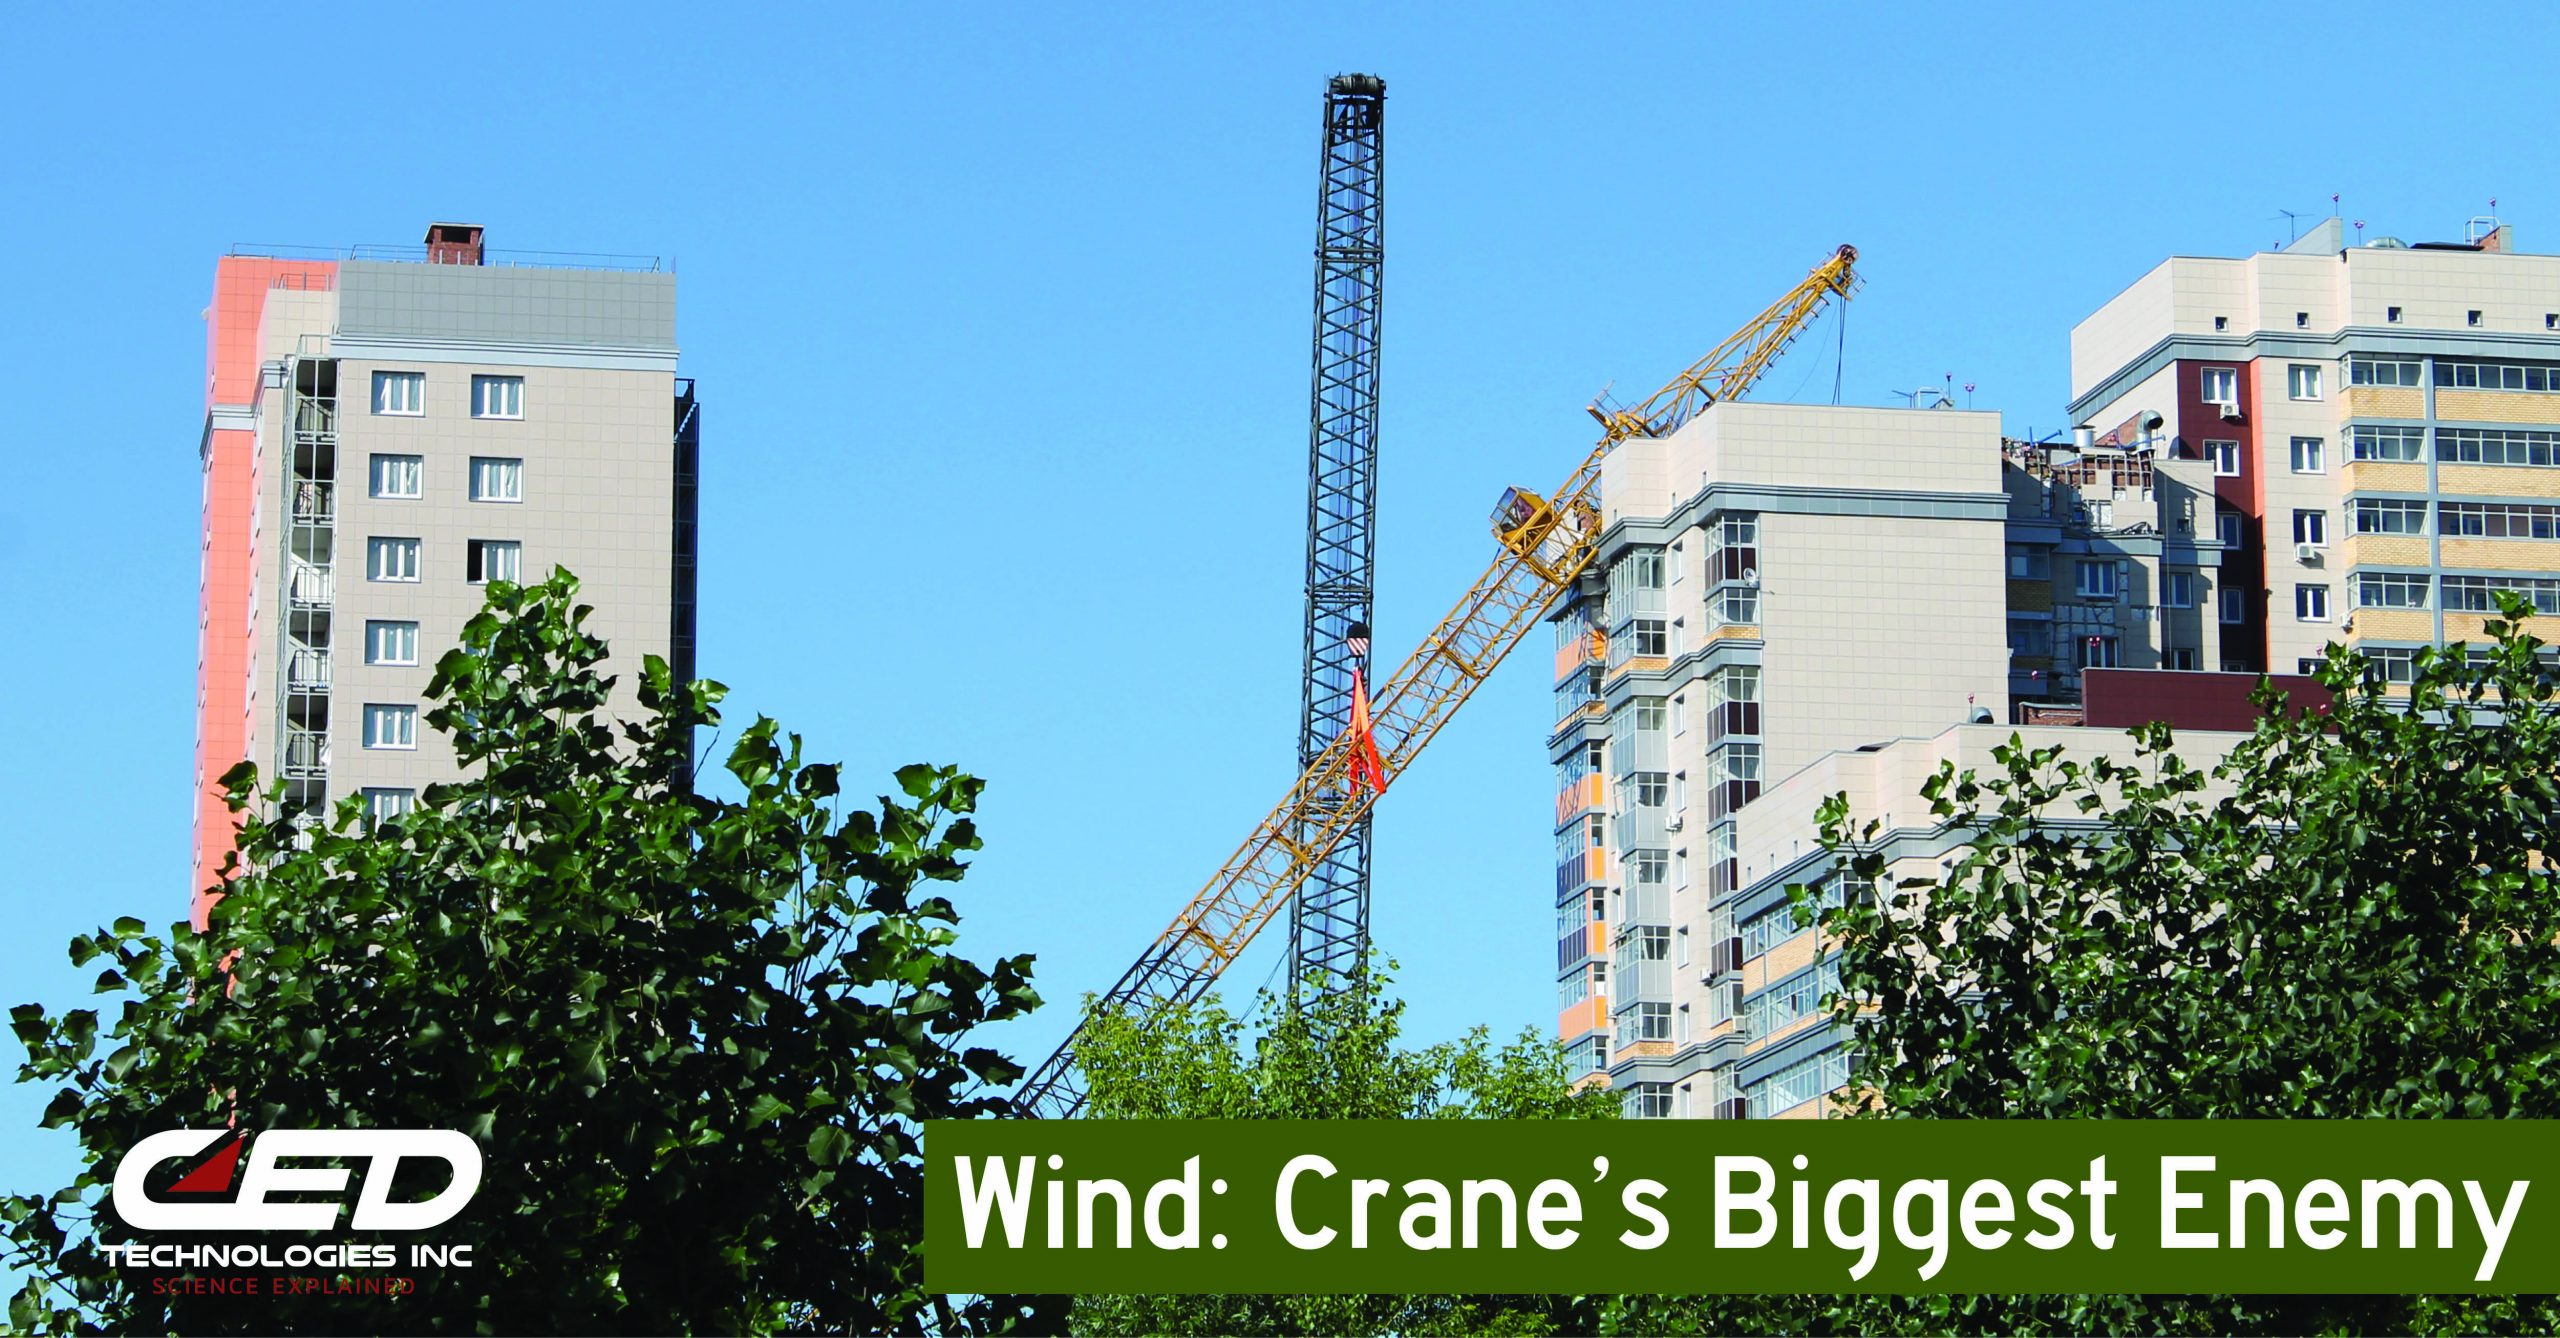 Crane’s Biggest Enemy: Windy Conditions